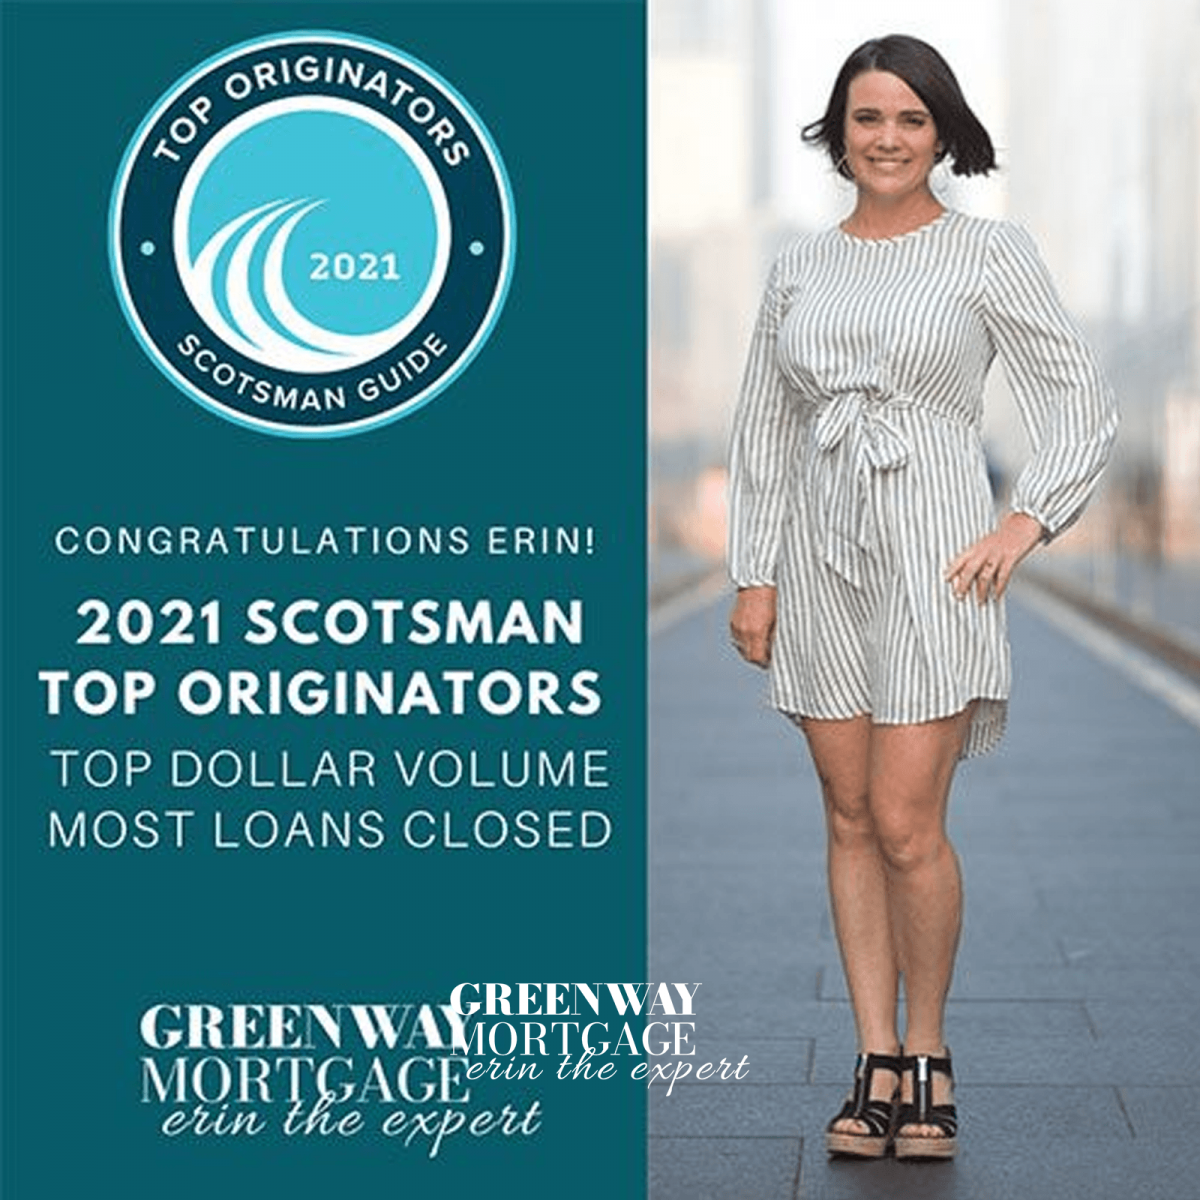 2021 Scotsman Top Originator Erin Carvelli